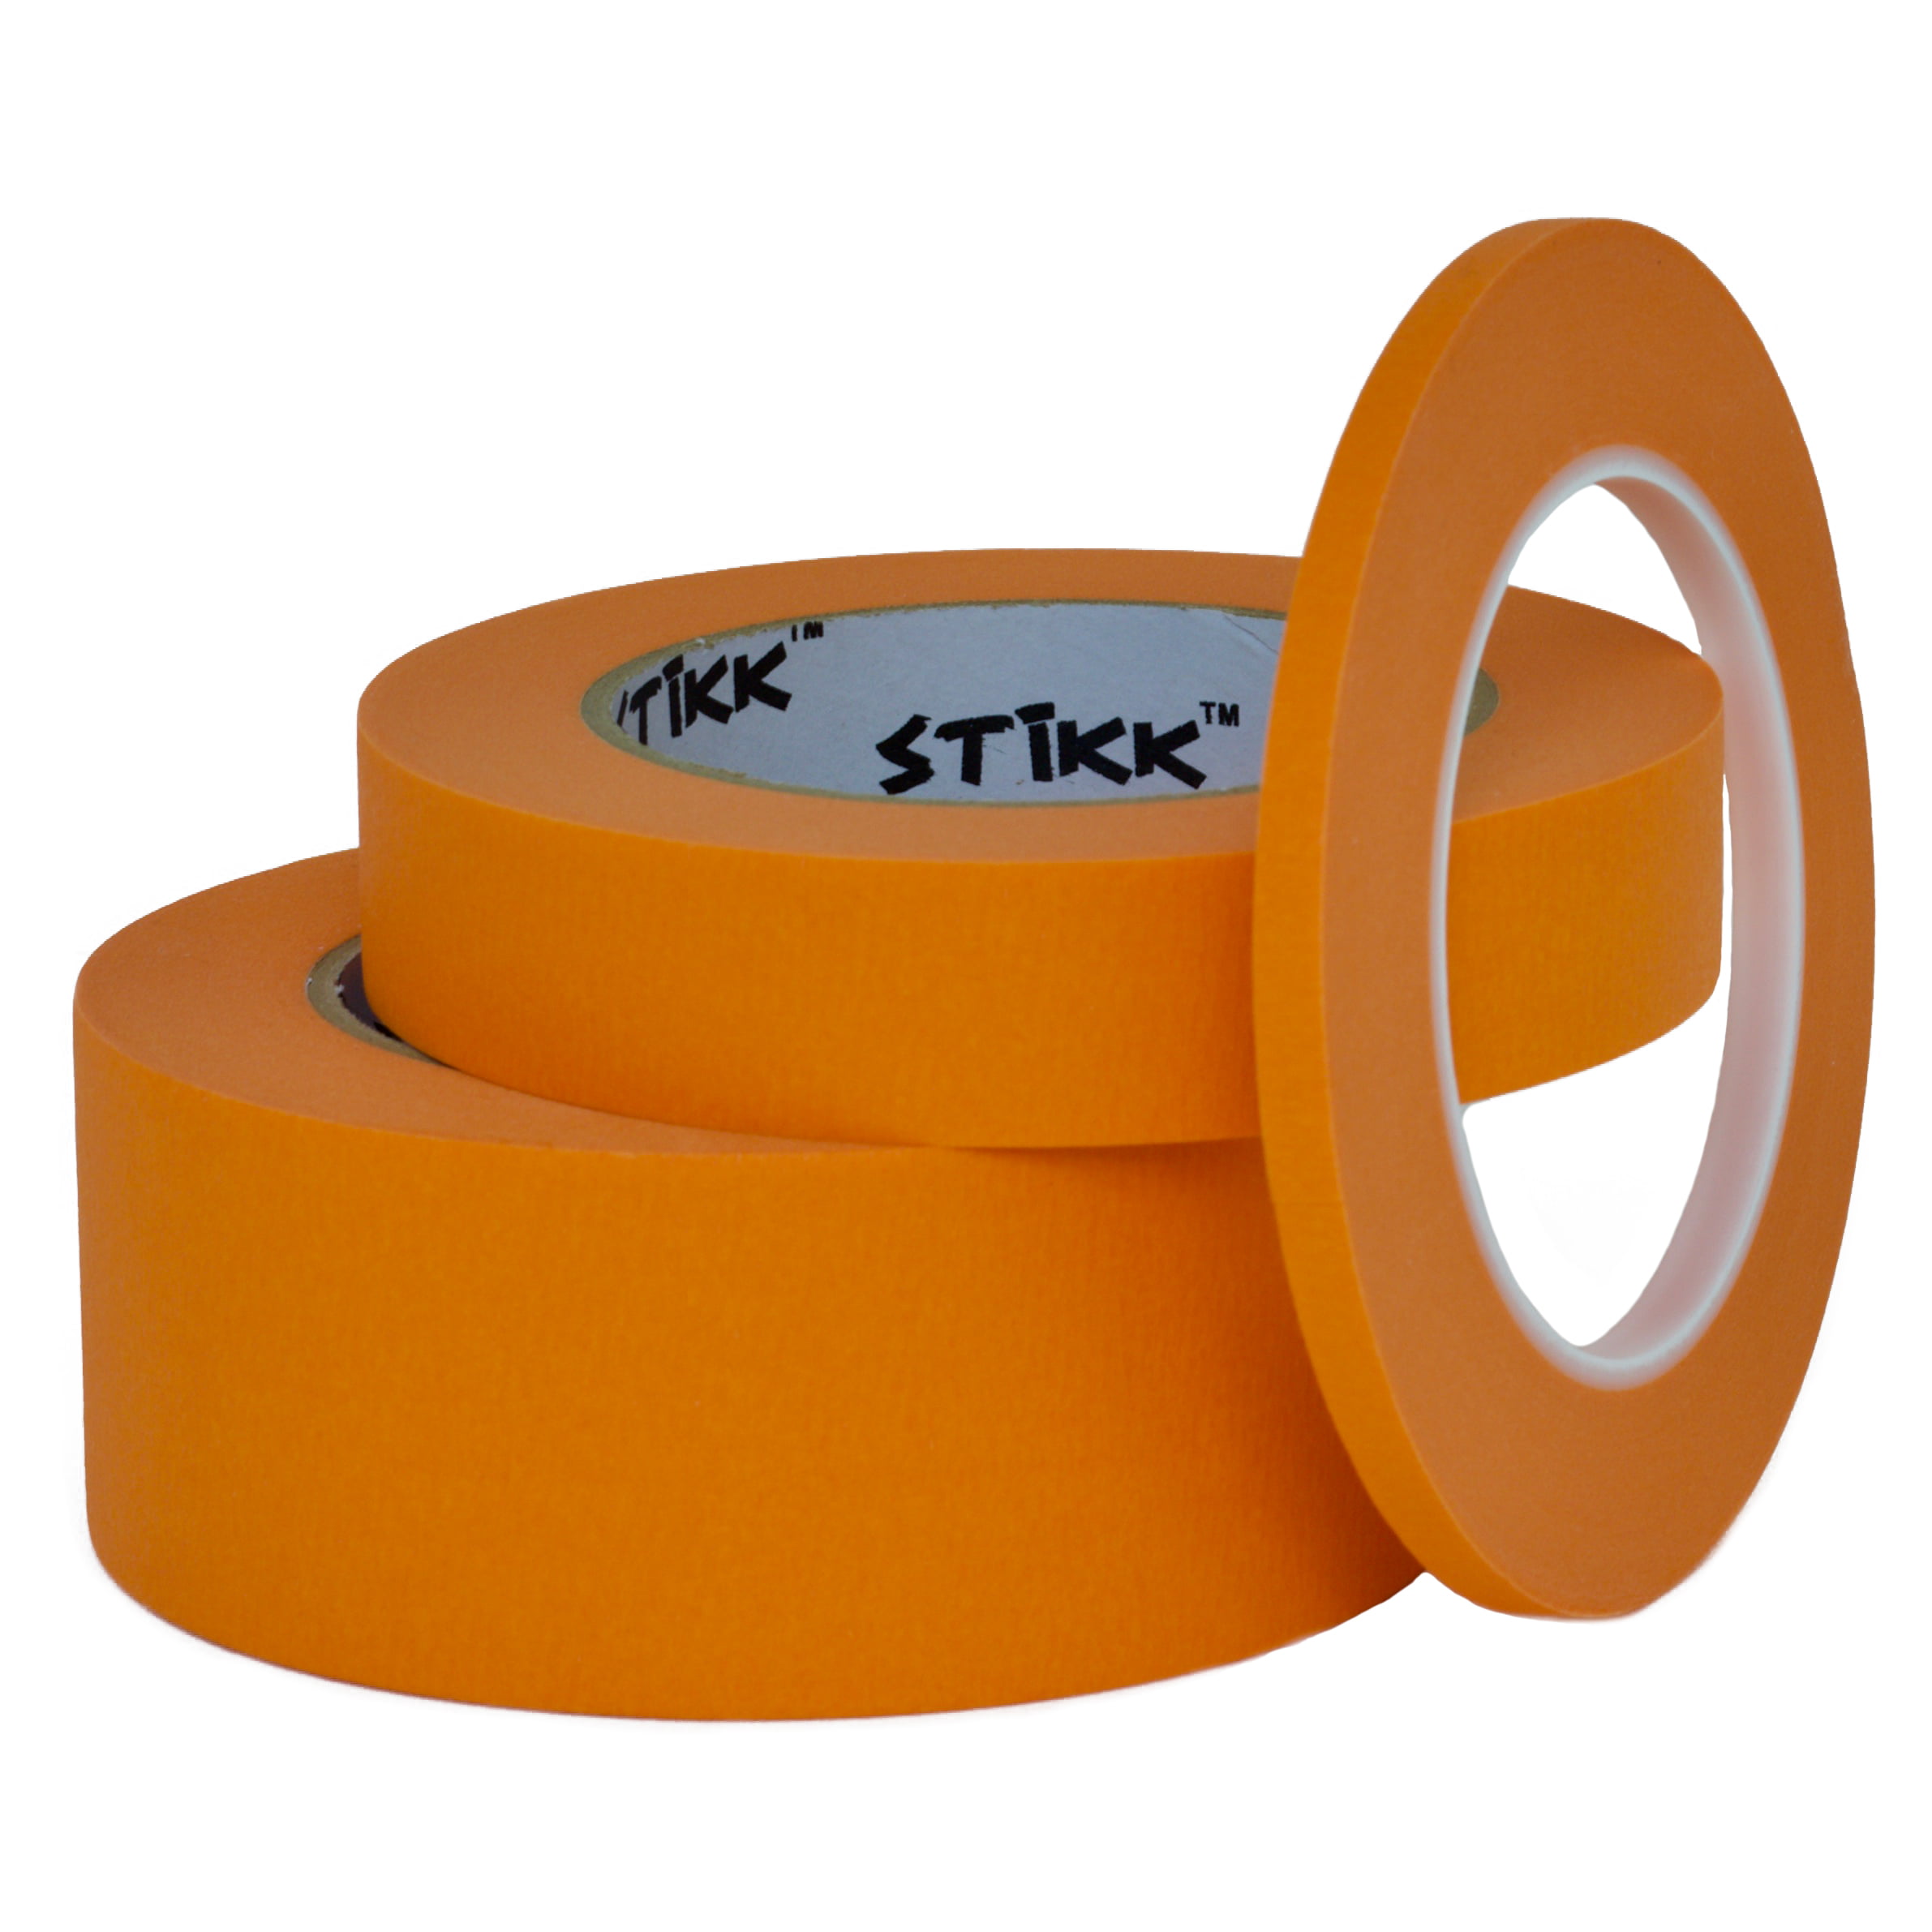 3 pack 1/4" .25 inch x 60yd 6mm x 55m Thin STIKK Orange Painters Masking Tape 